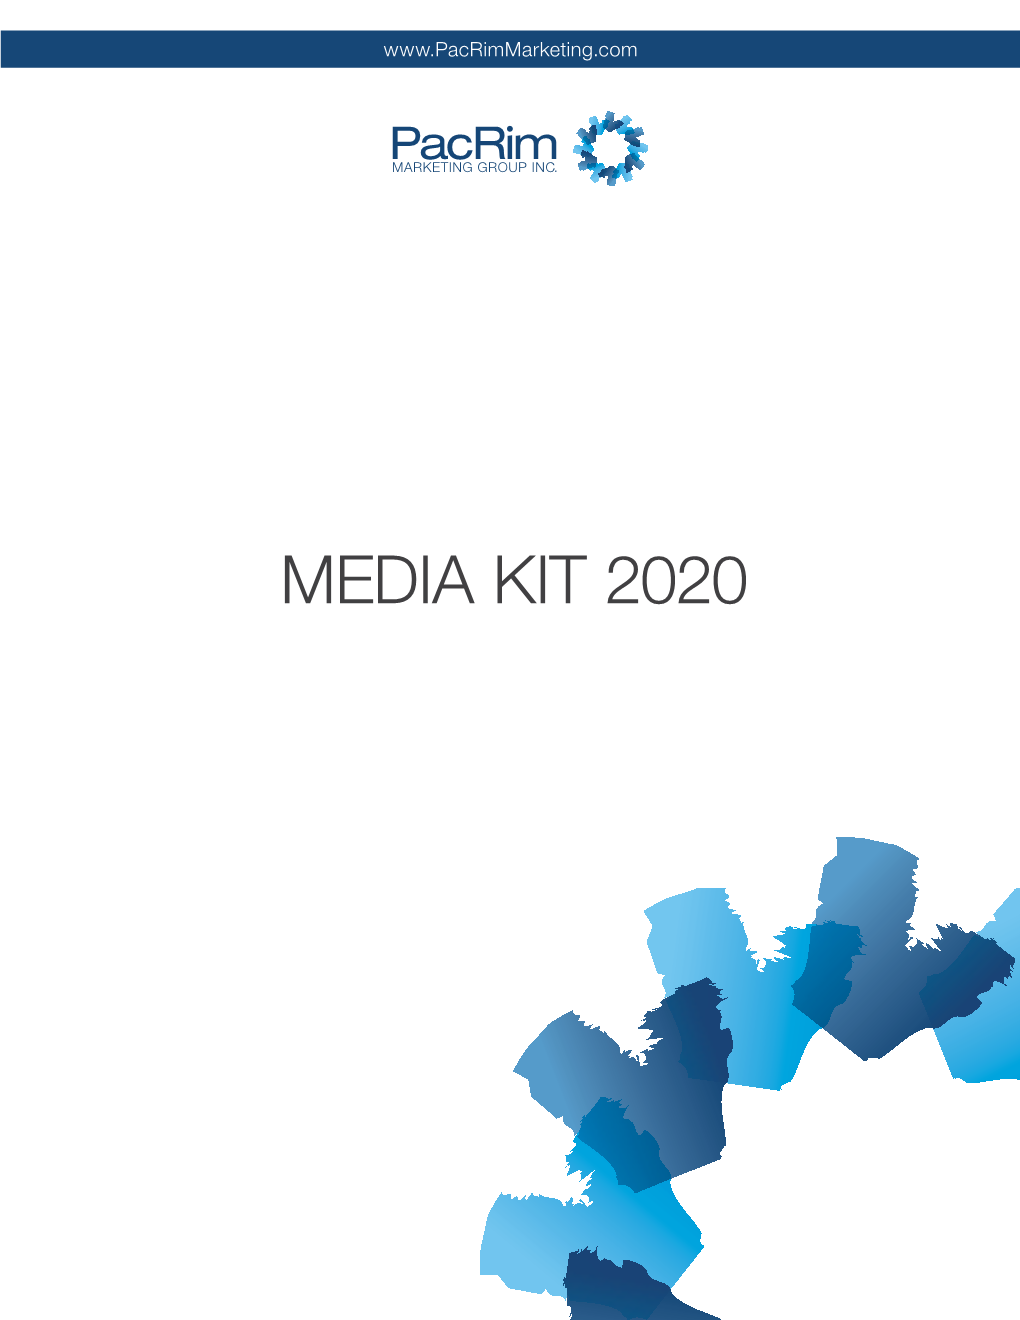 MEDIA KIT 2020 Introduction to Pacrim Marketing Group, Inc